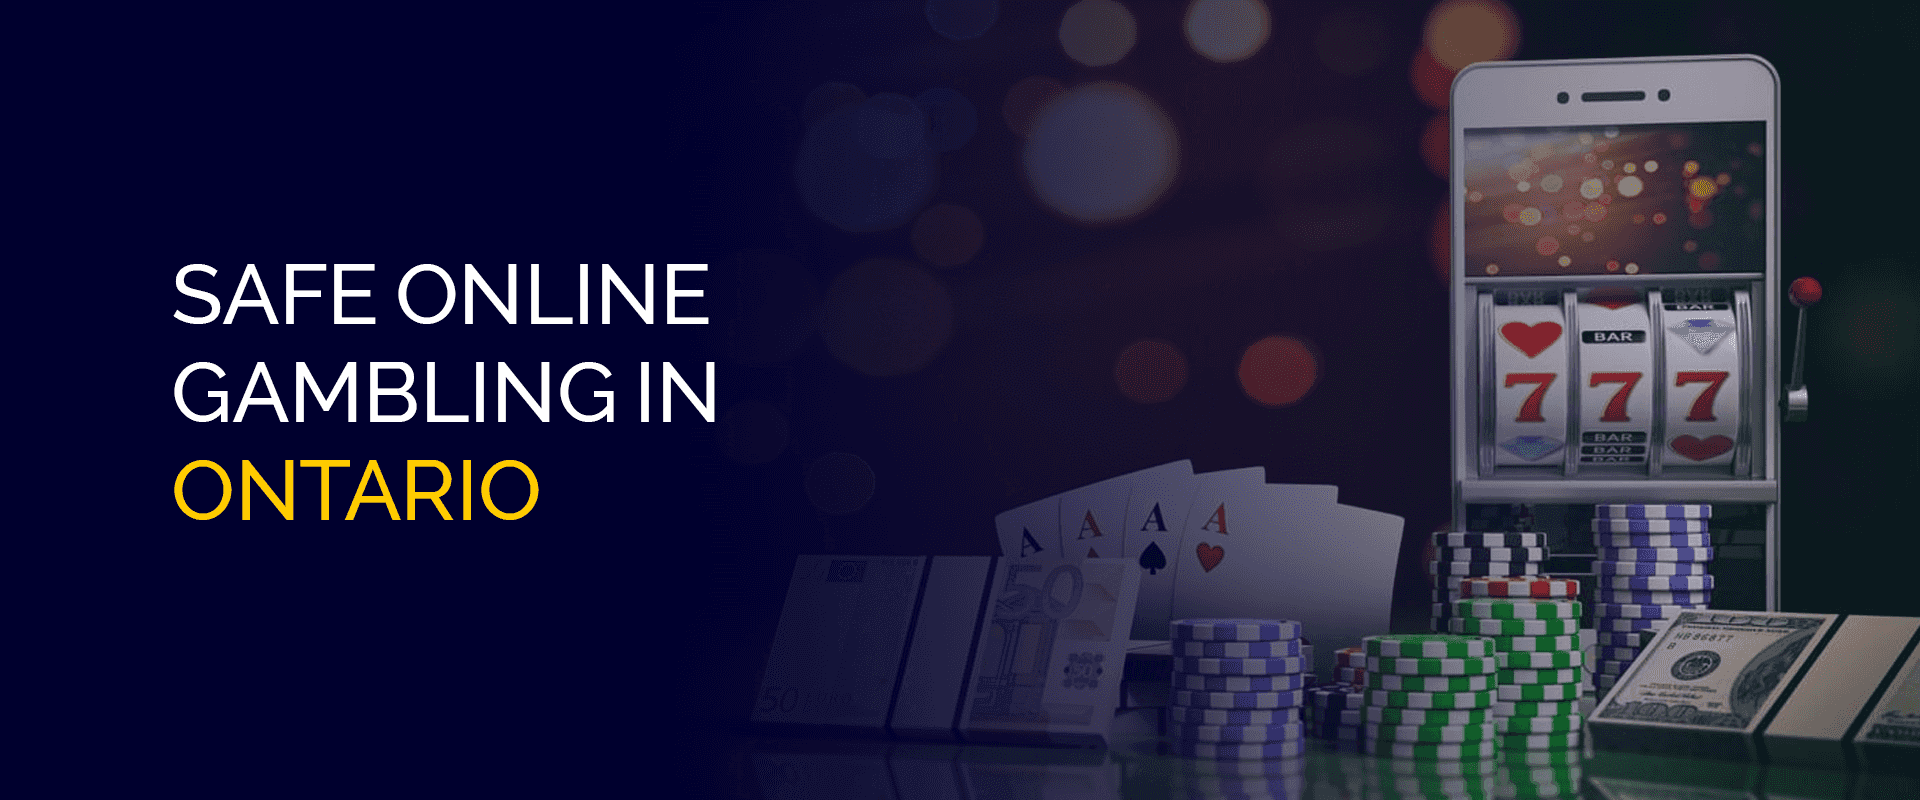 Safe Online Gambling in Ontario